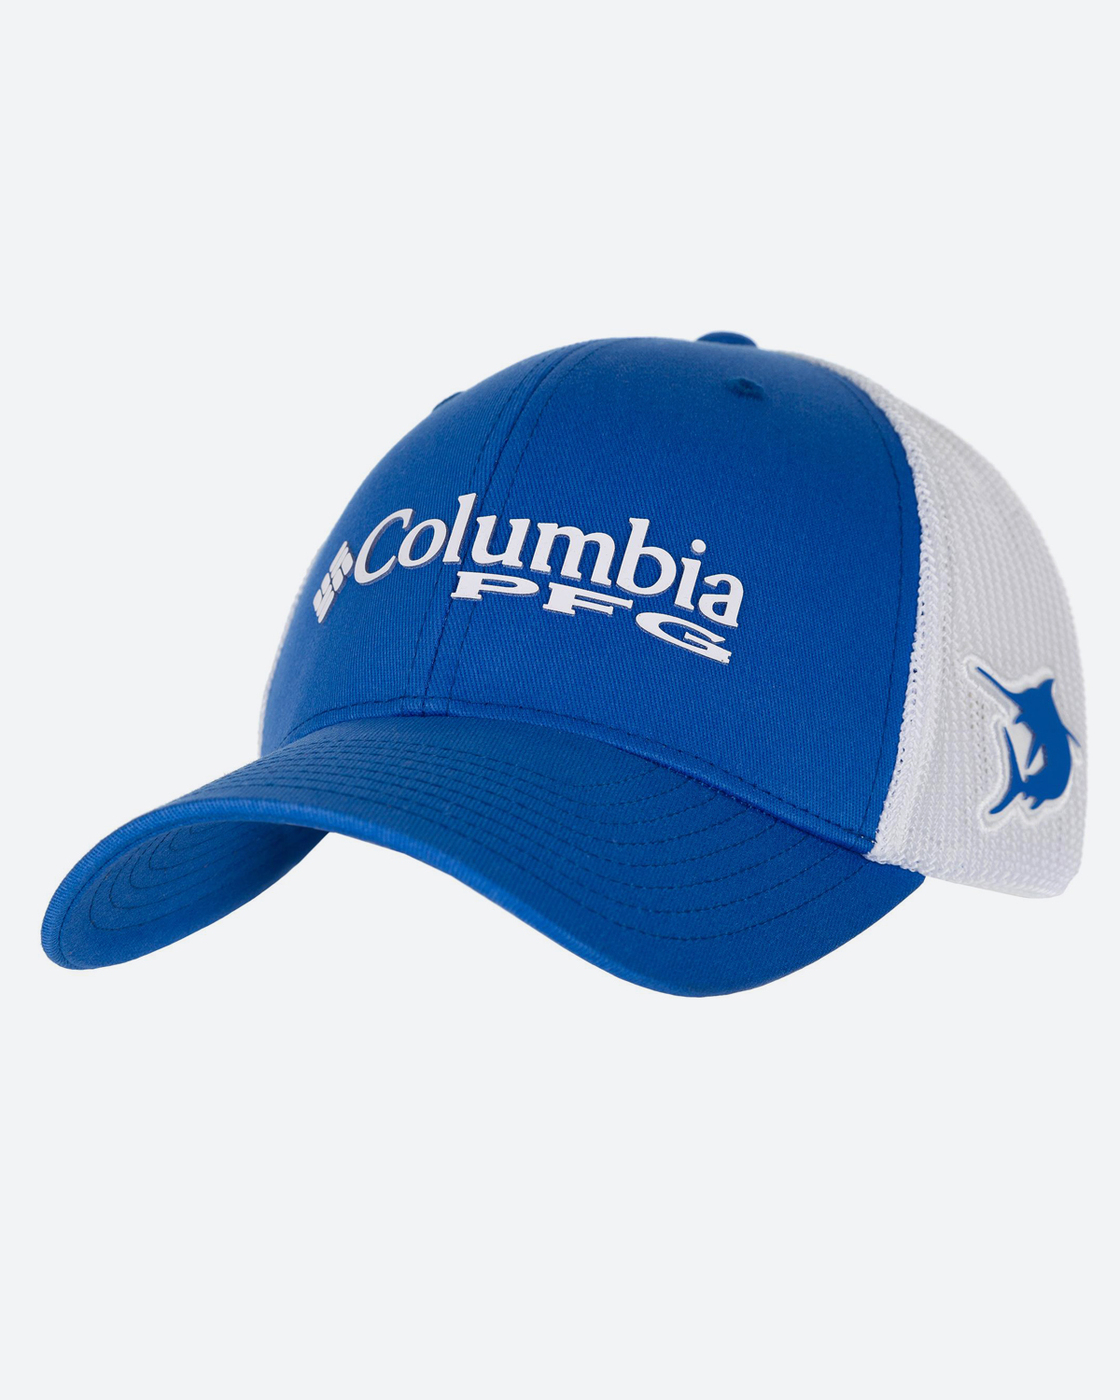 Озон бейсболки женские. Бейсболка Columbia PFG. Бейсболка Columbia PFG Mesh. Бейсболка PFG Mesh Ball cap. Бейсболки Columbia PFG мужские.